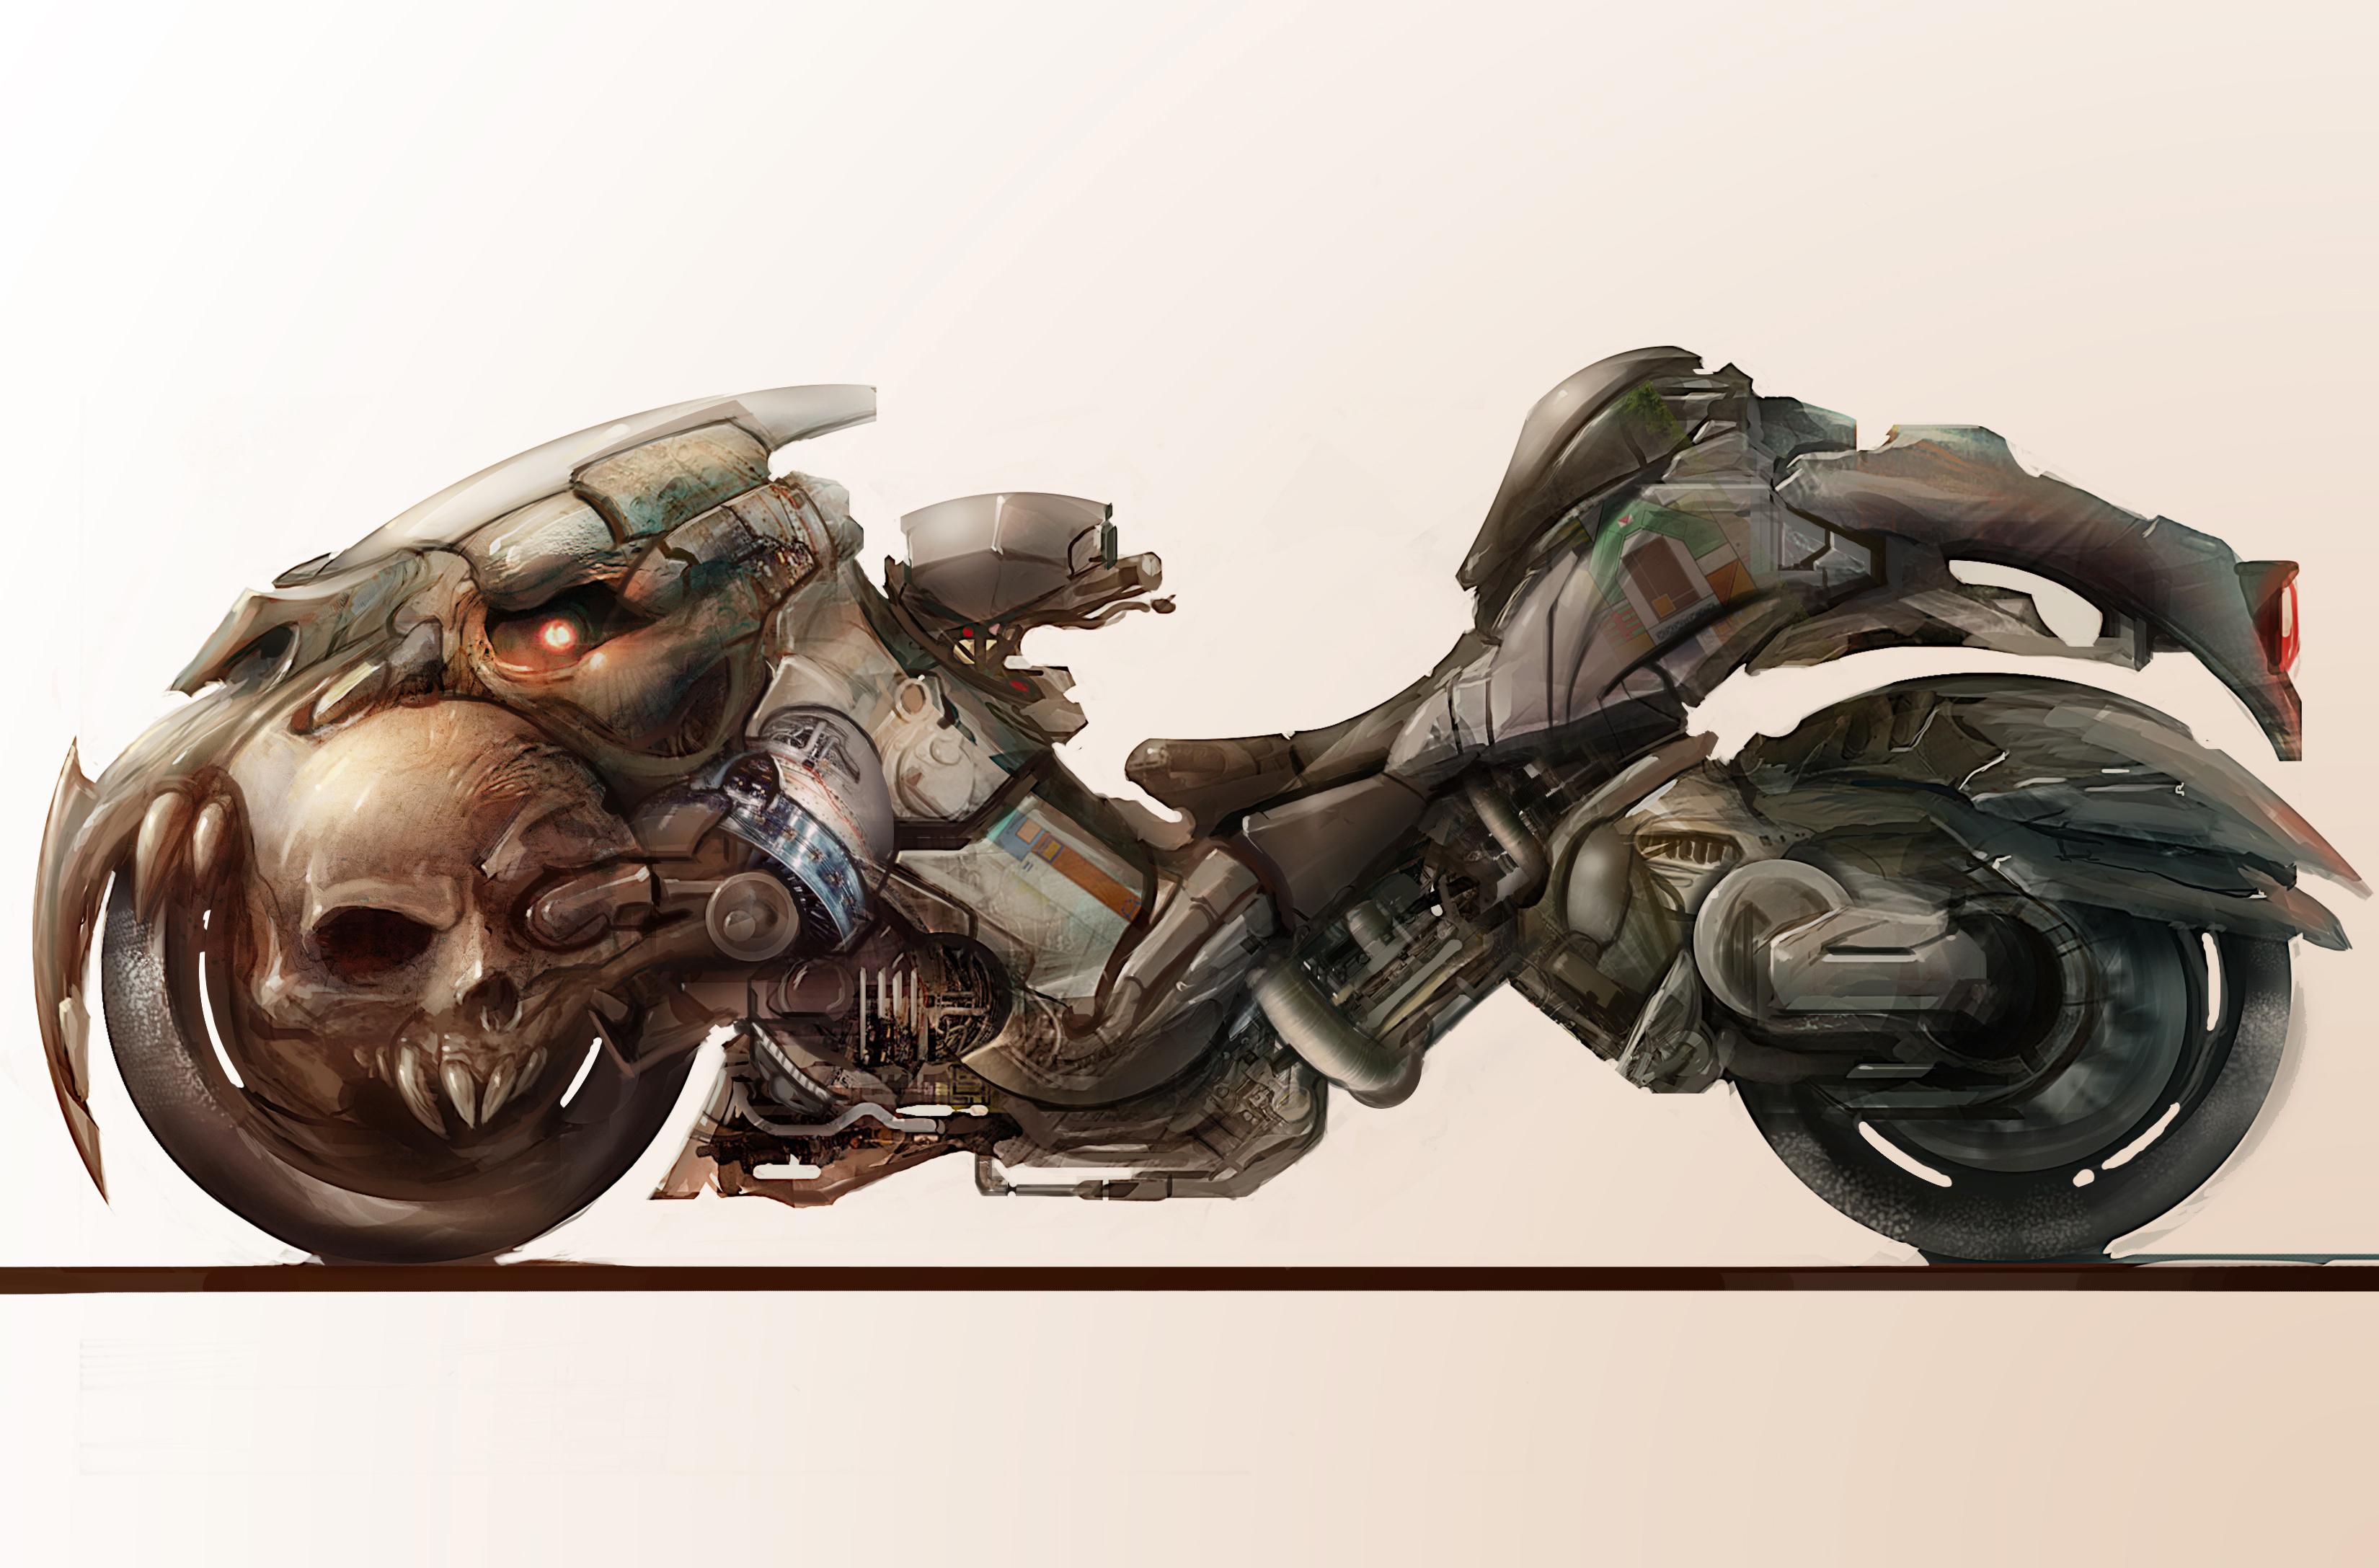 Fantasy Motorcycles Sci-fi 3300x2175 px Wallpaper